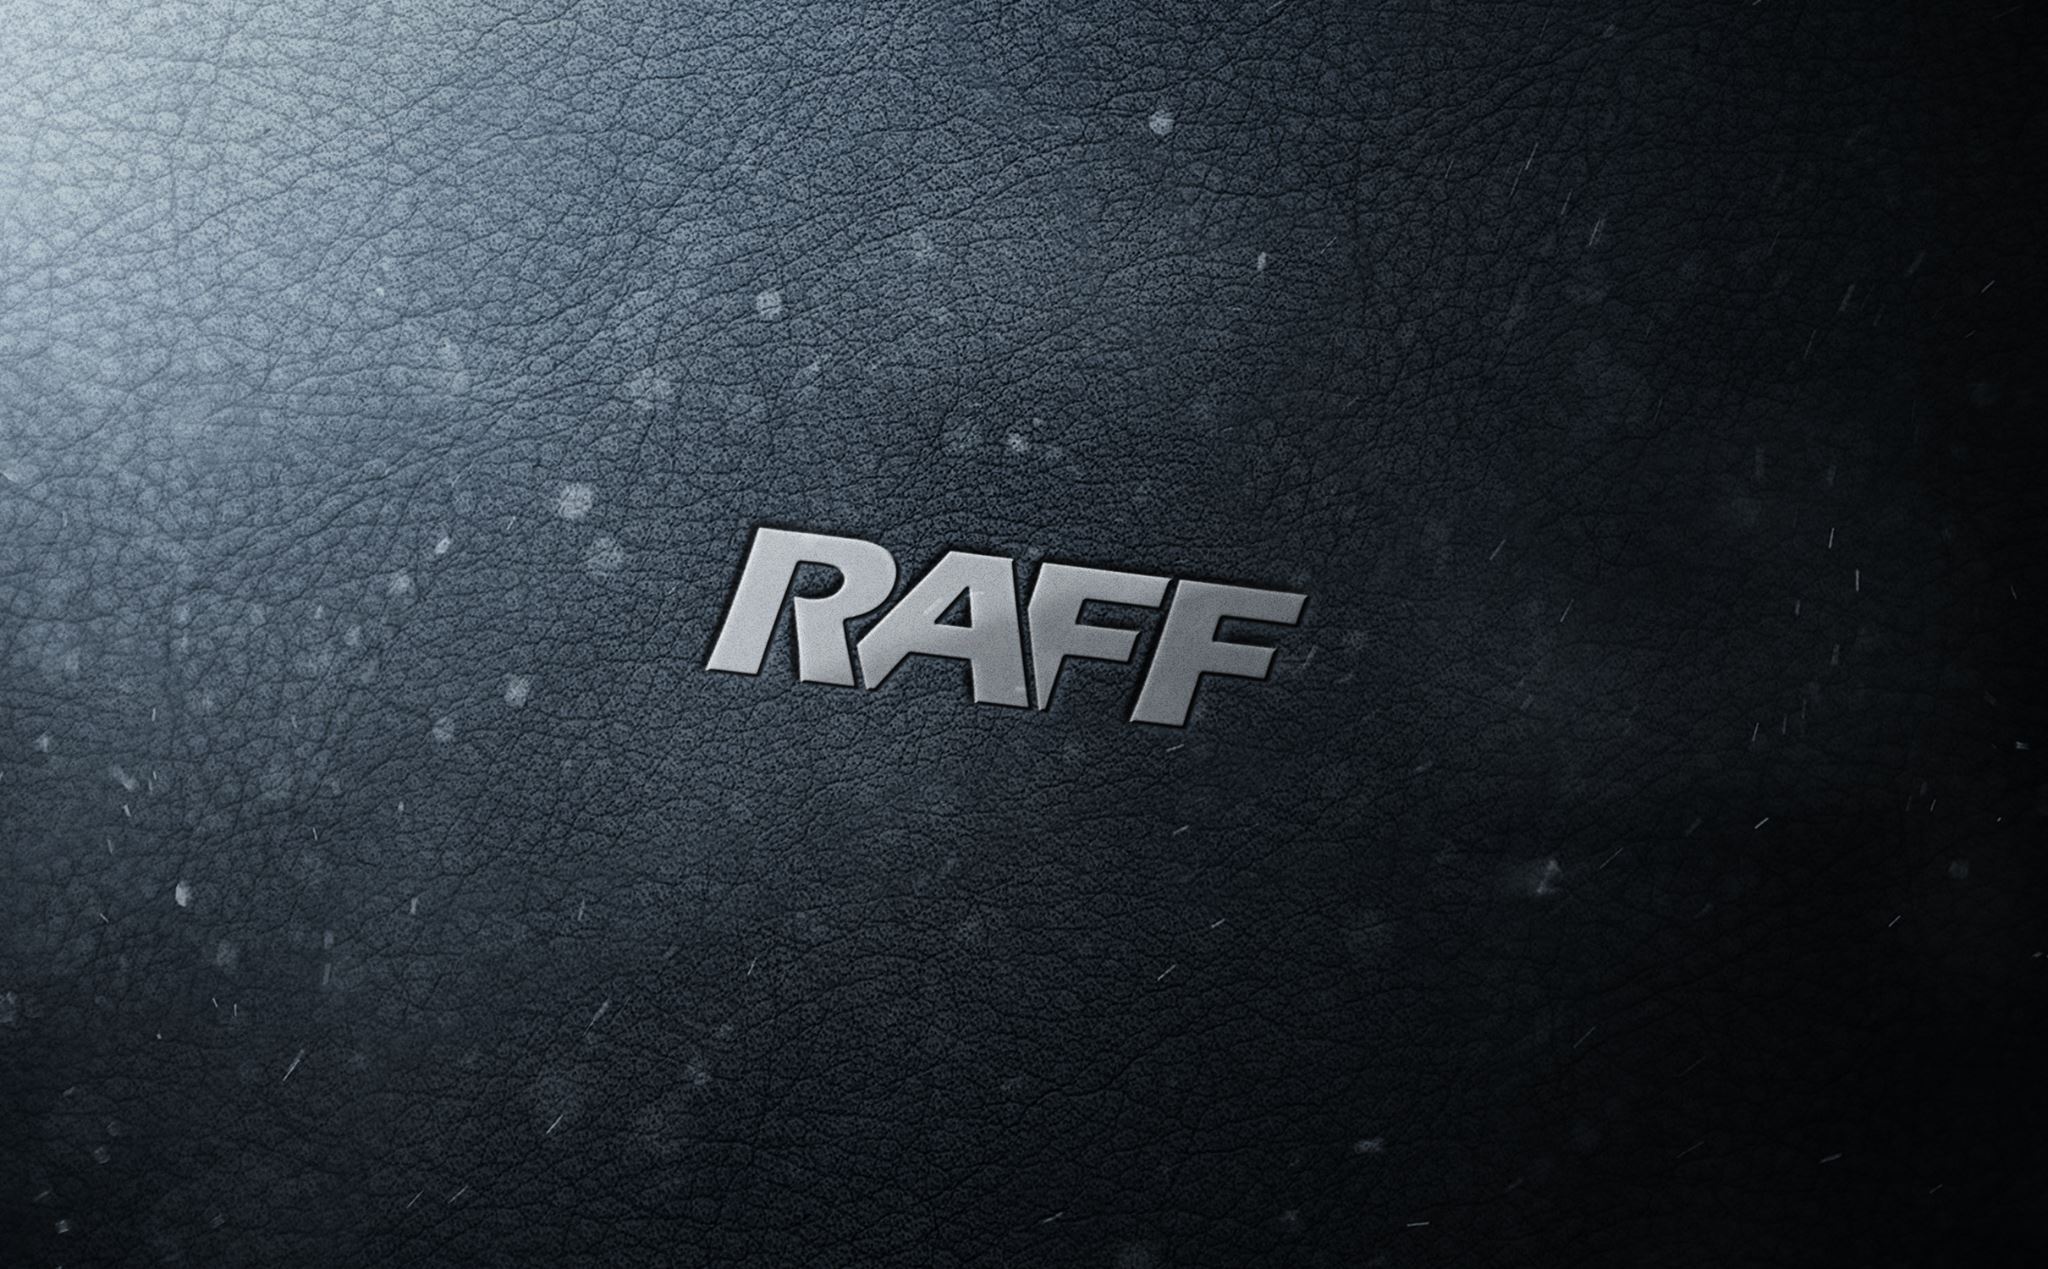 The RAFF company